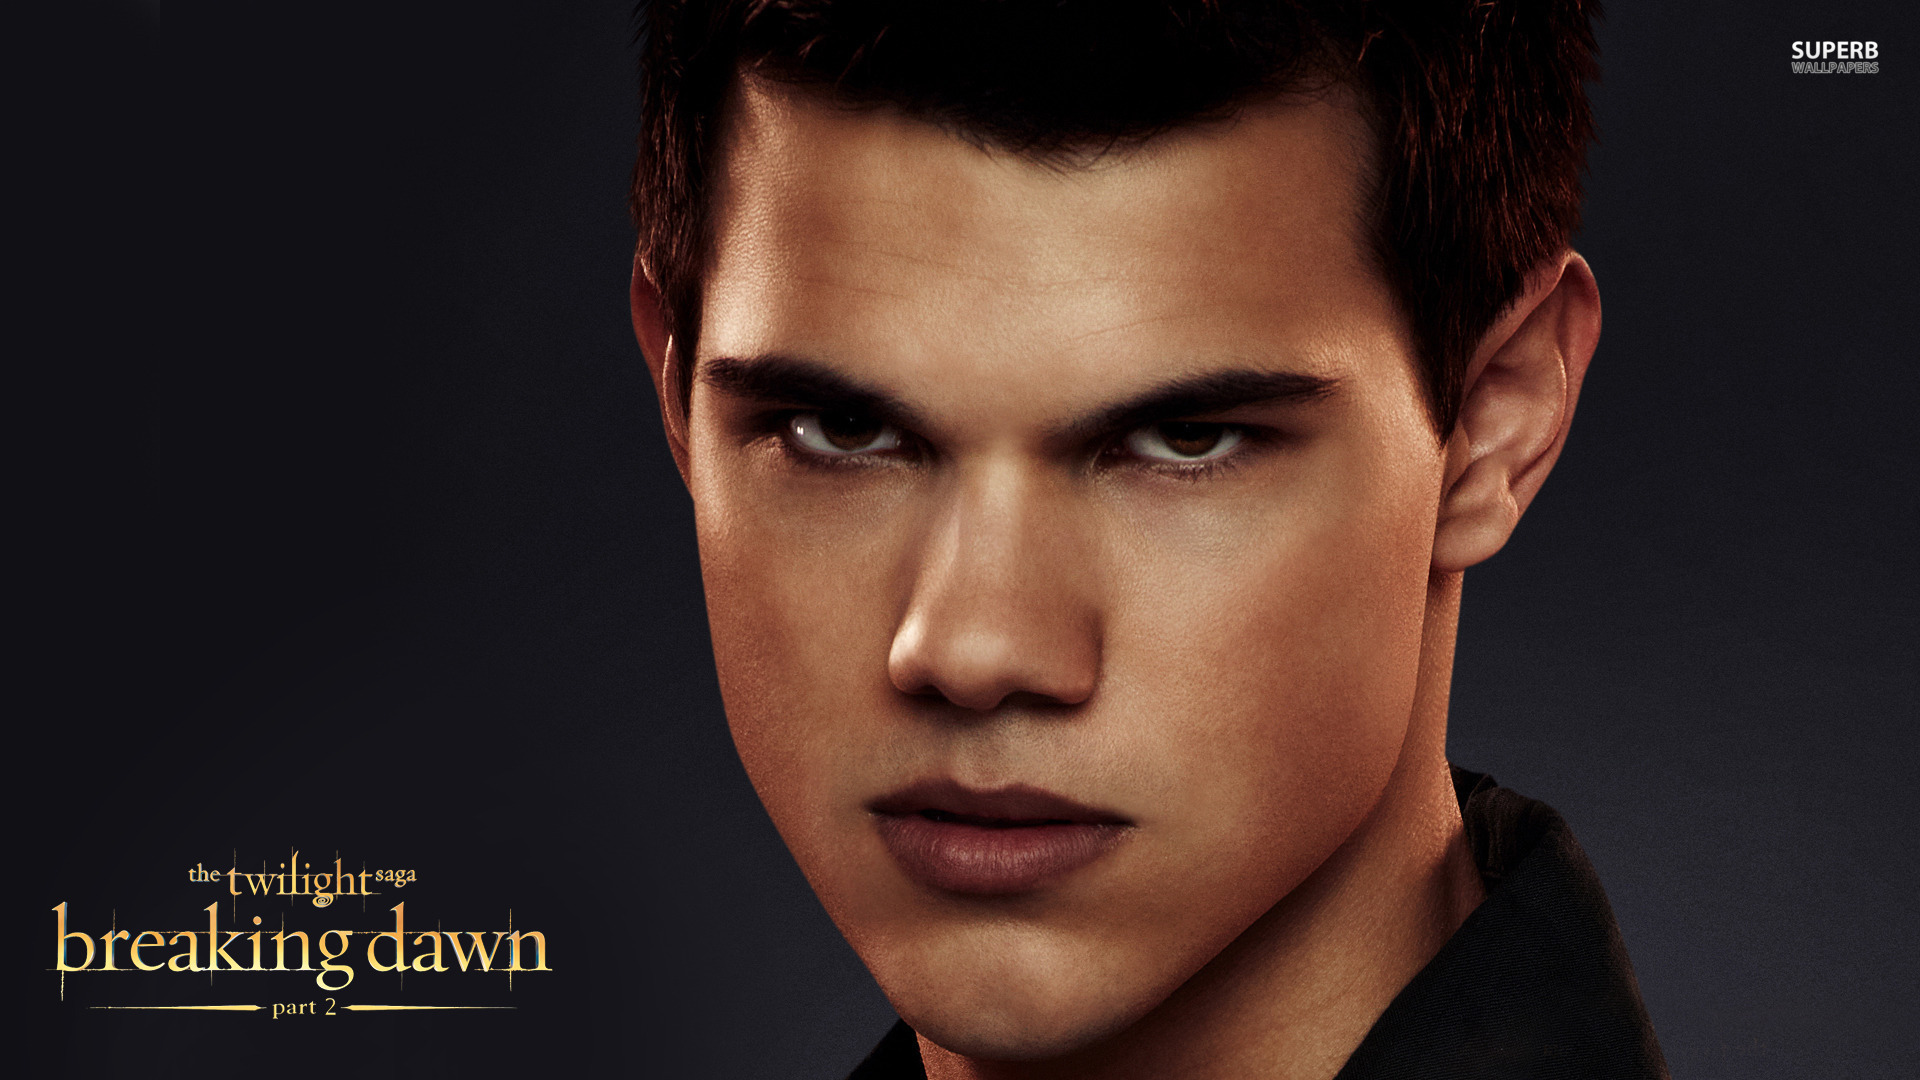 The Twilight Saga Breaking Dawn - Part 2 Desktop and mobile